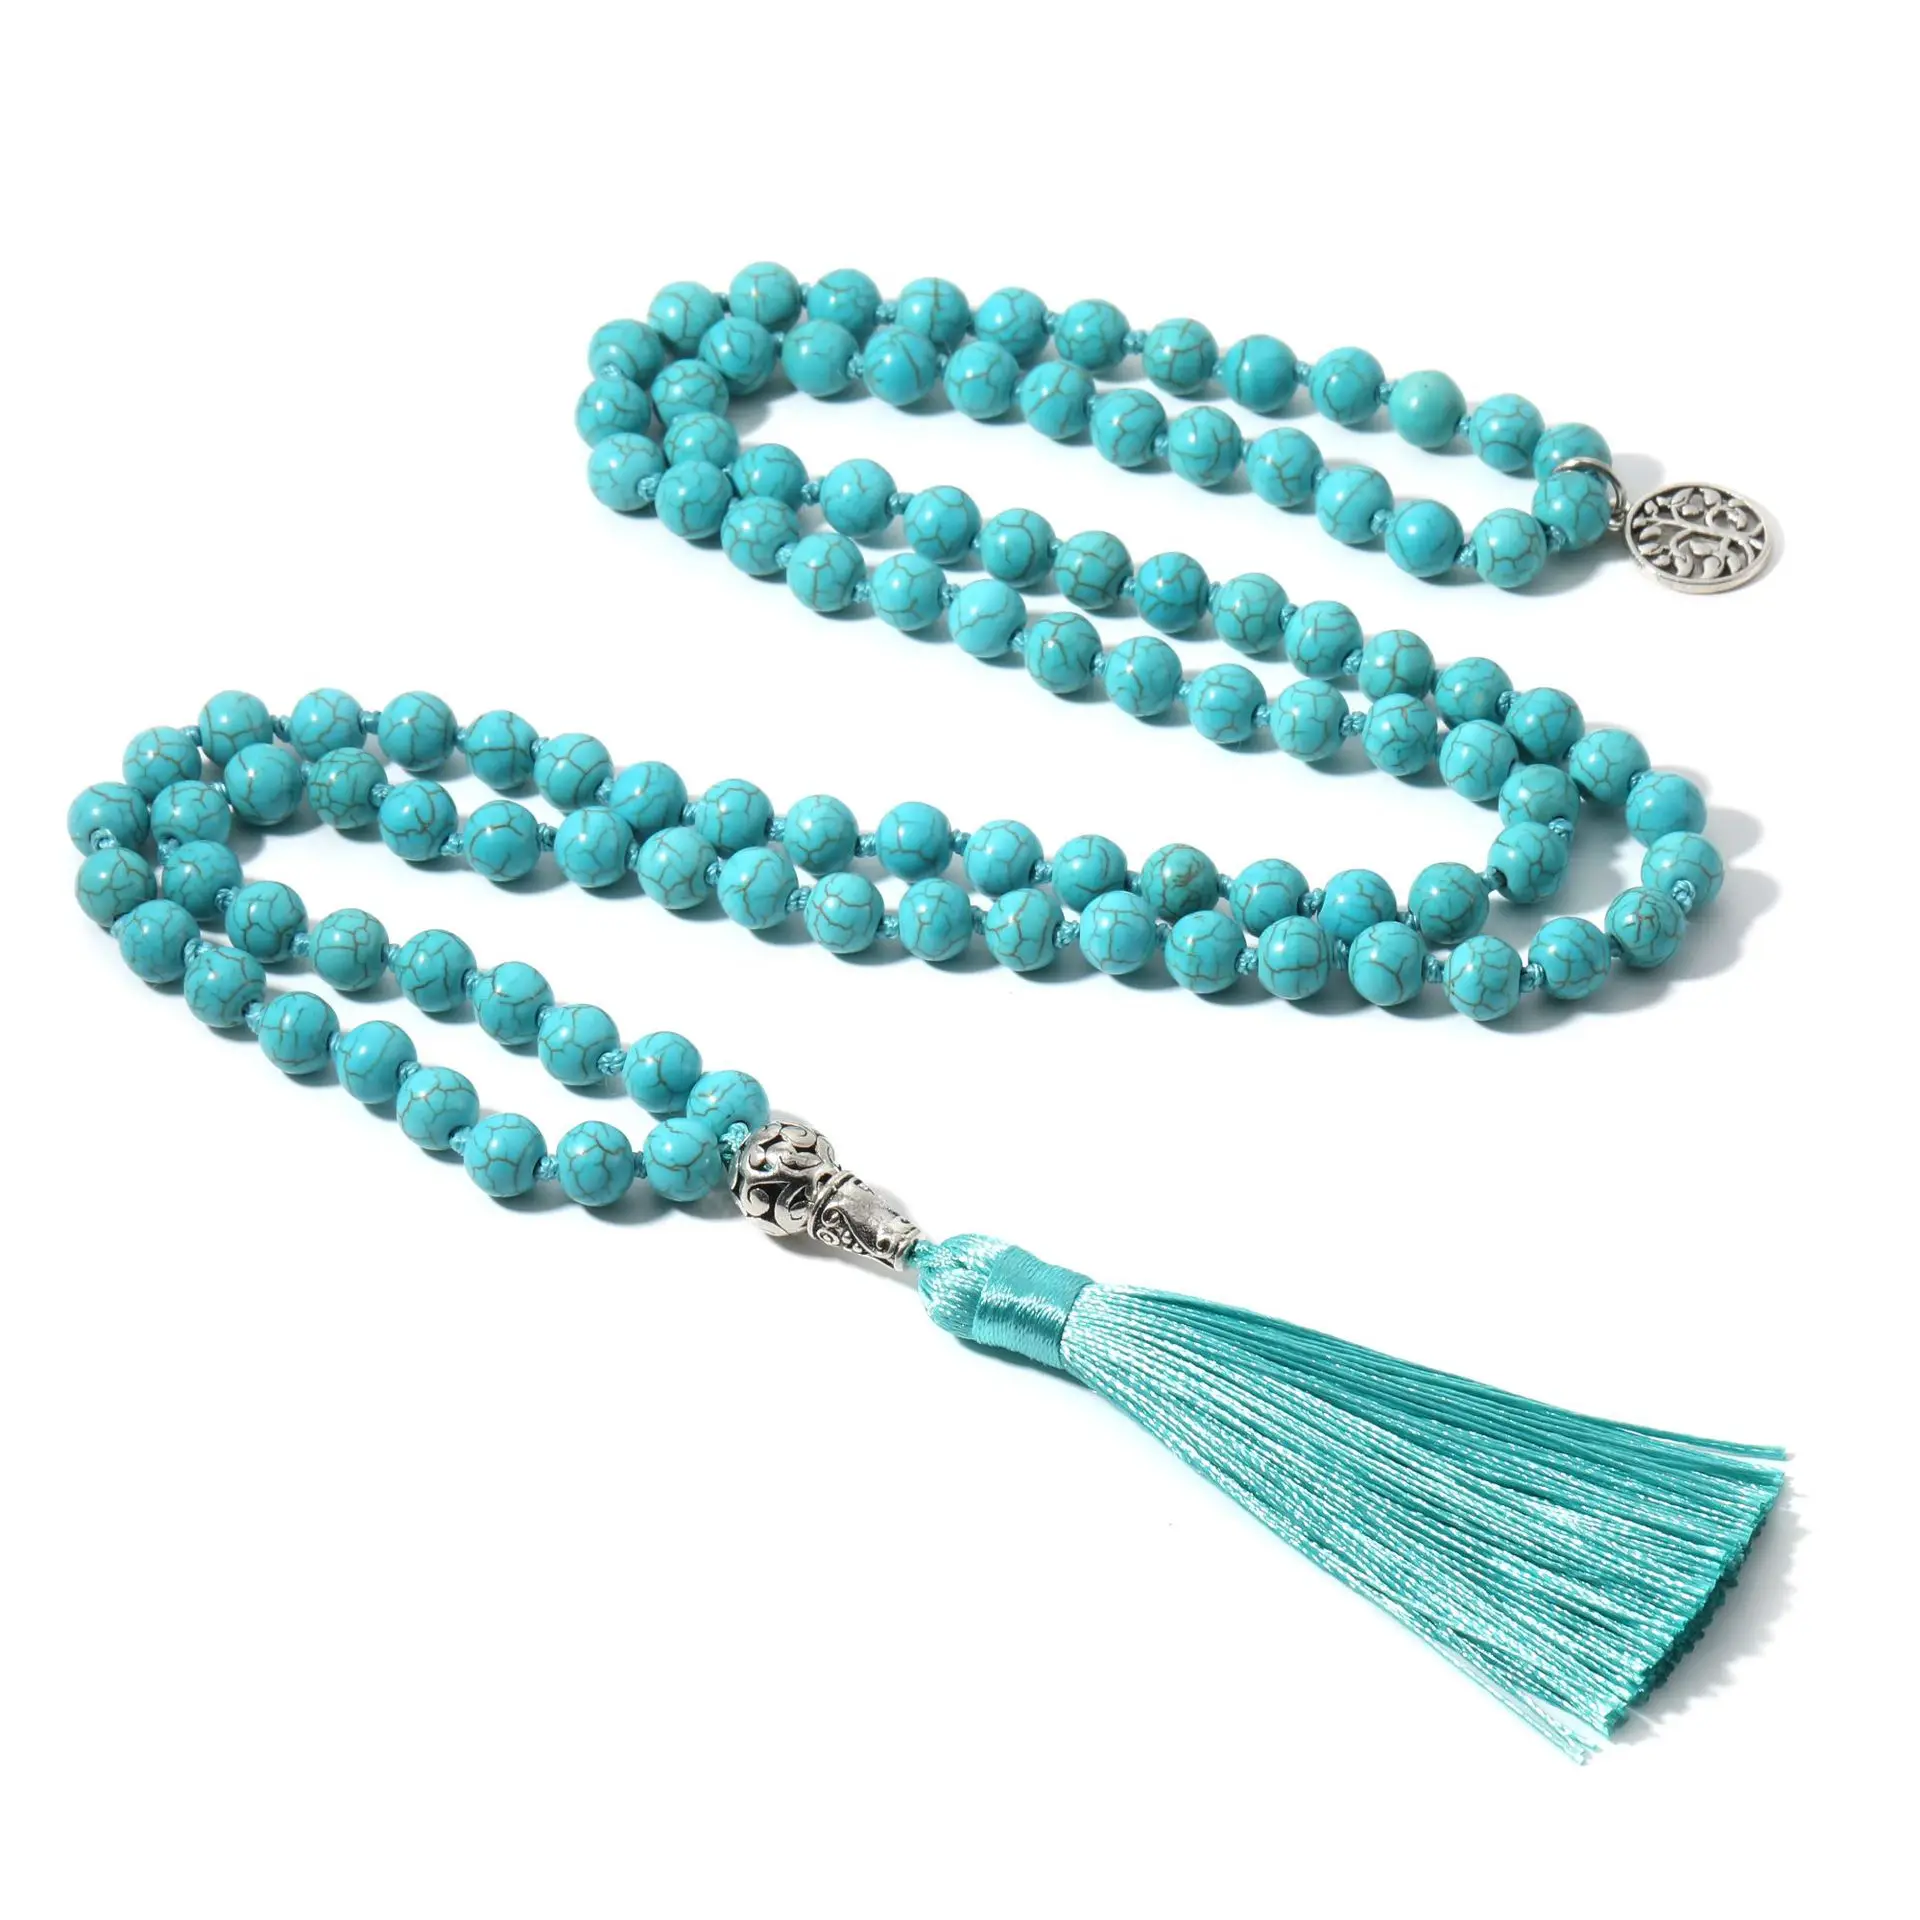 Original Natural Turquoise 108 Beads Tree Of Life Necklace Mala Beads Yoga Meditation Rosary Prayer Jewelry Accessory